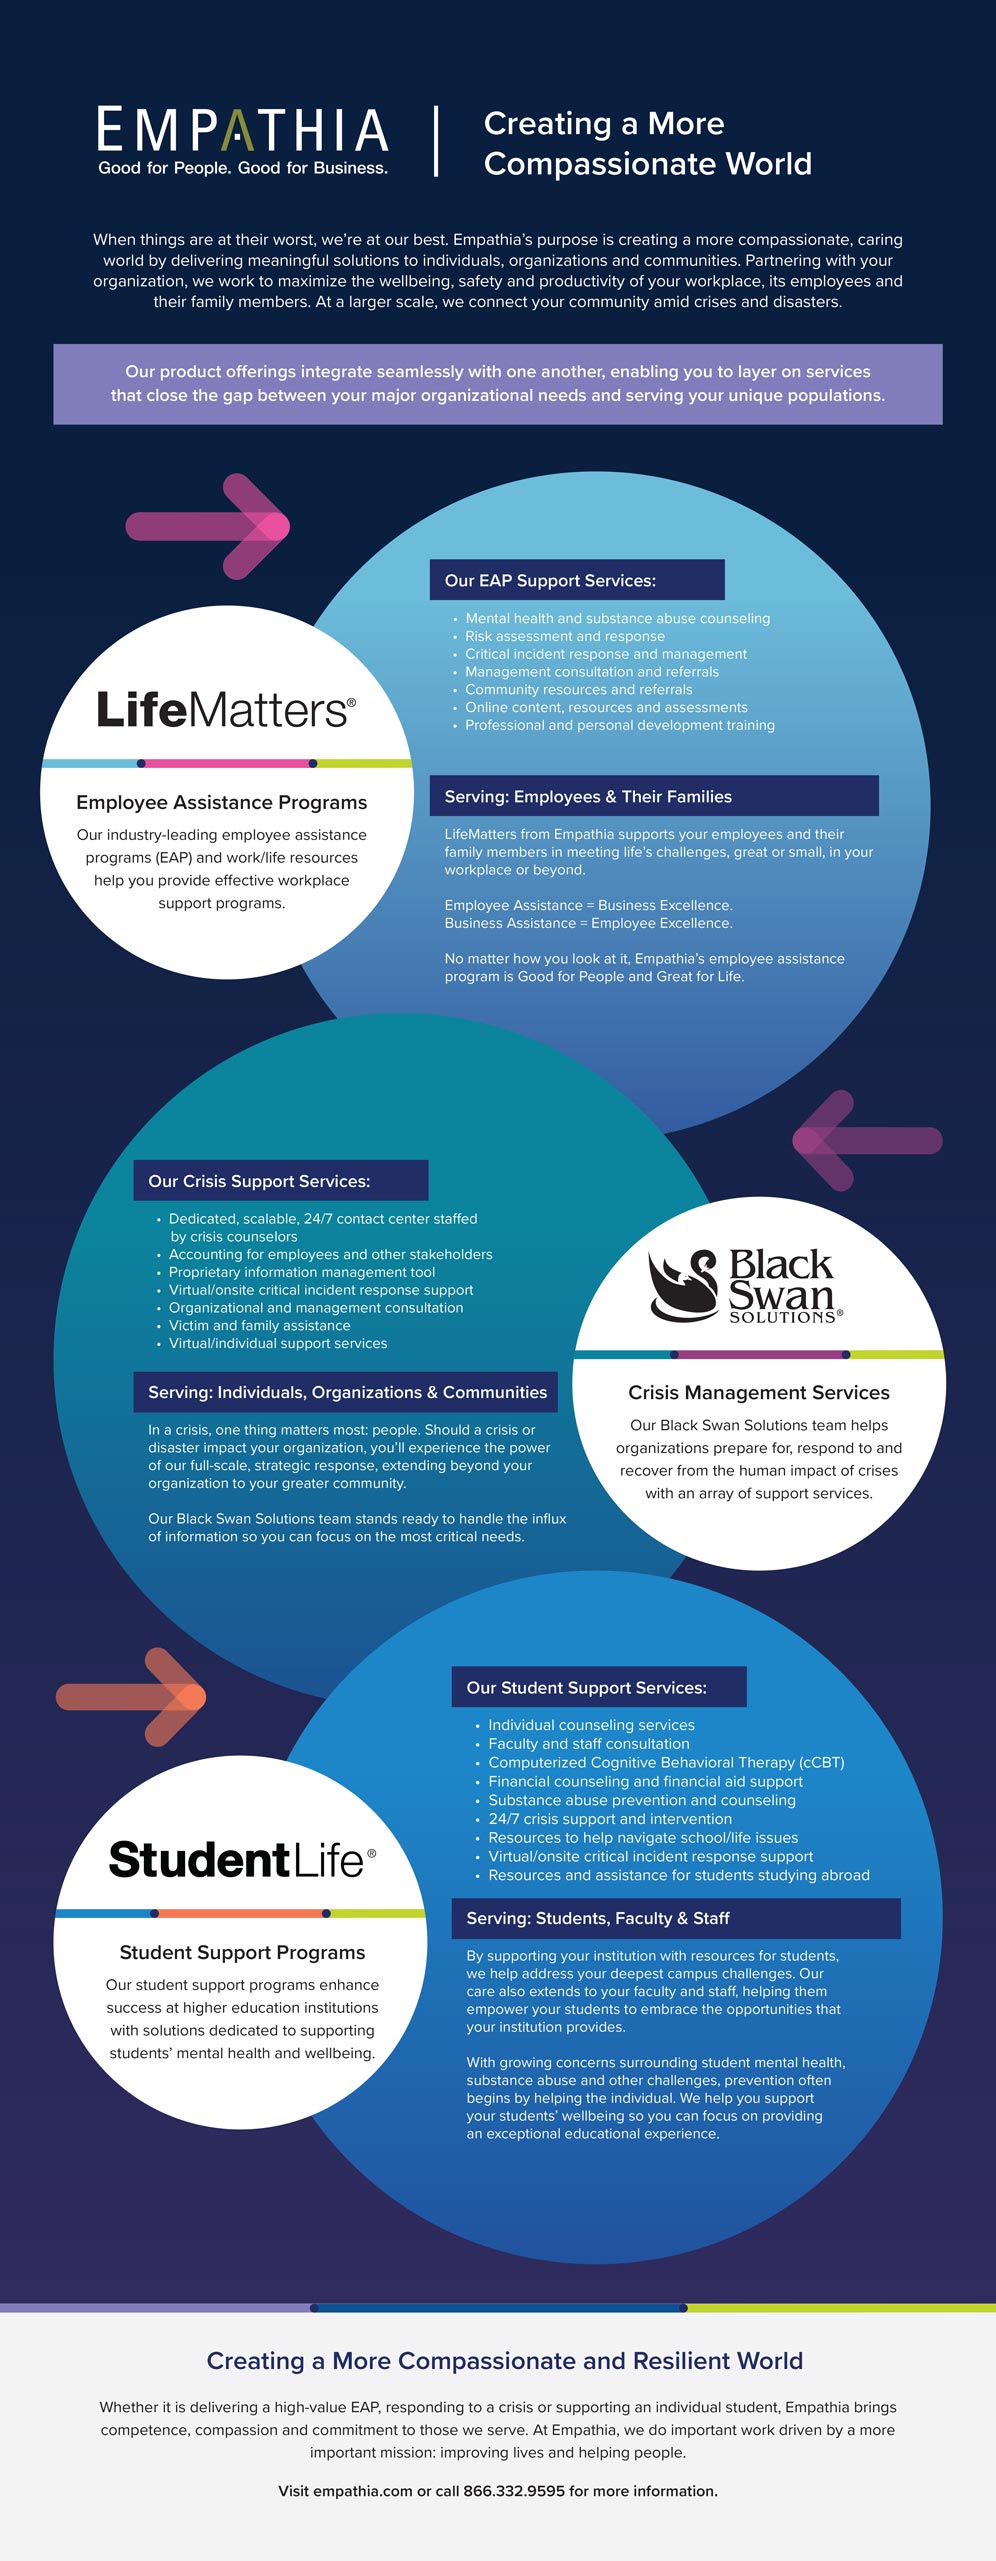 Empathia's Core Service Offerings Infographic